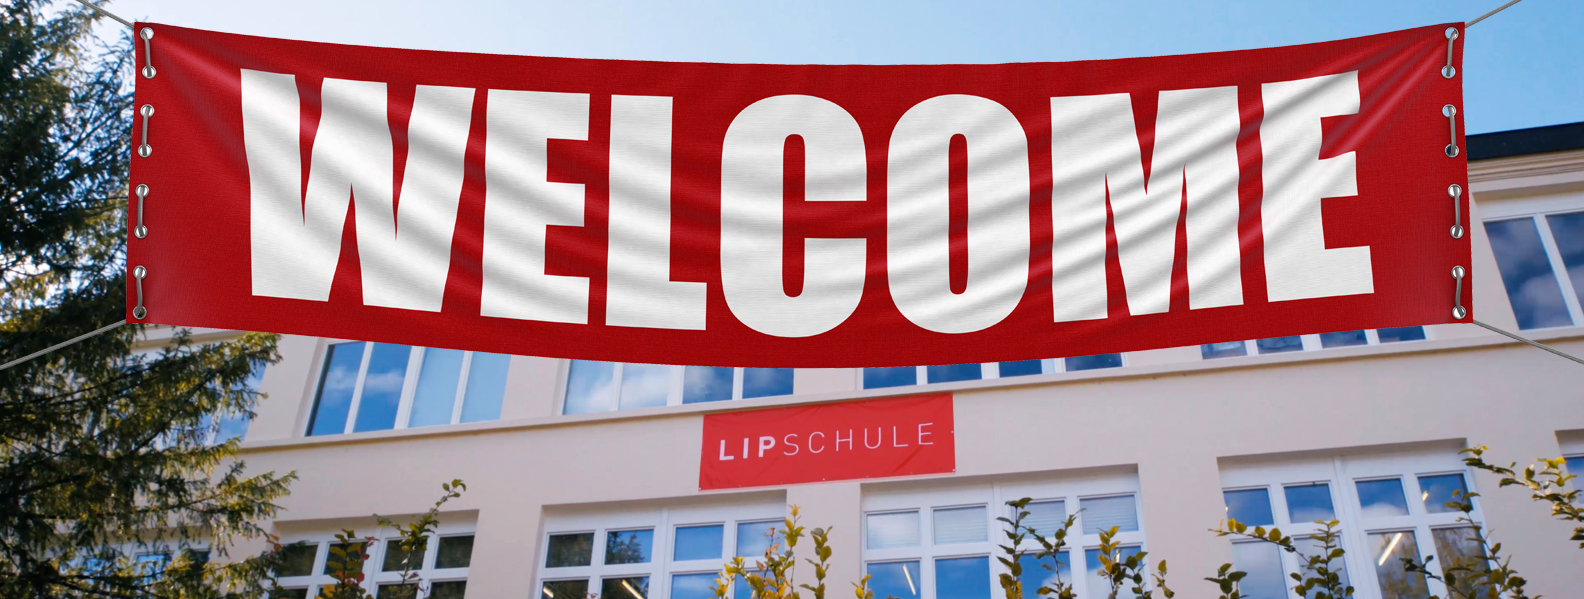 A talk about LIPSCHULE’s open house event - Lipschule